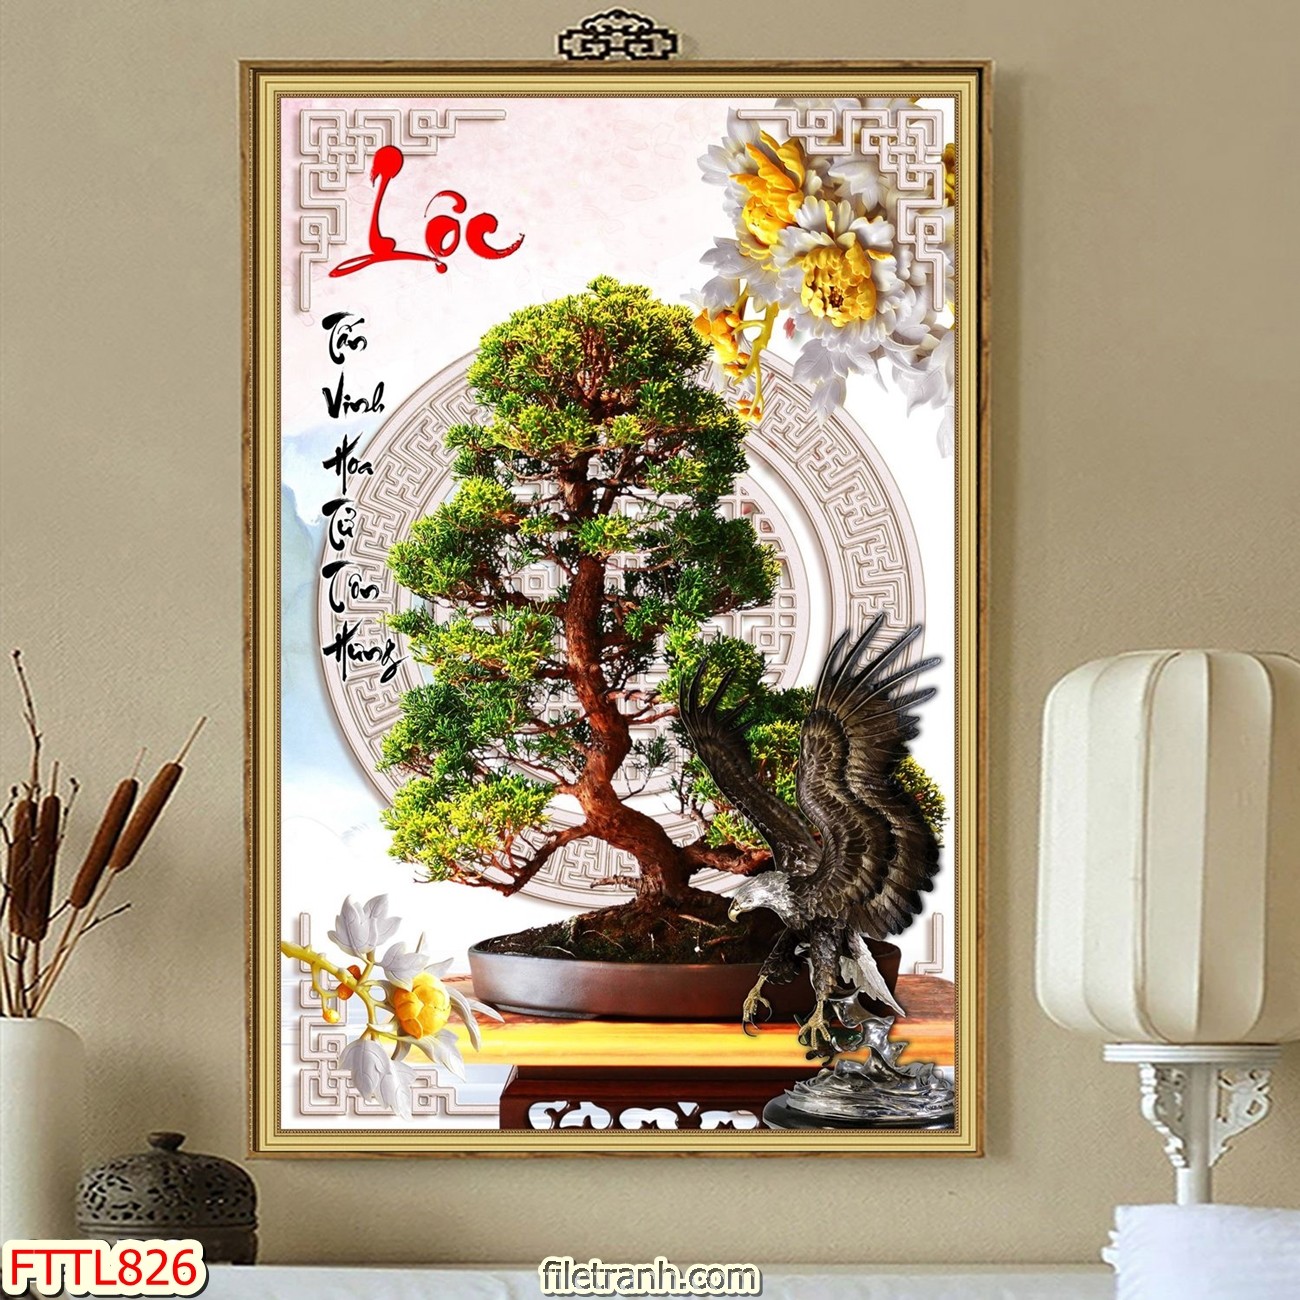 https://filetranh.com/file-tranh-chau-mai-bonsai/file-tranh-chau-mai-bonsai-fttl826.html